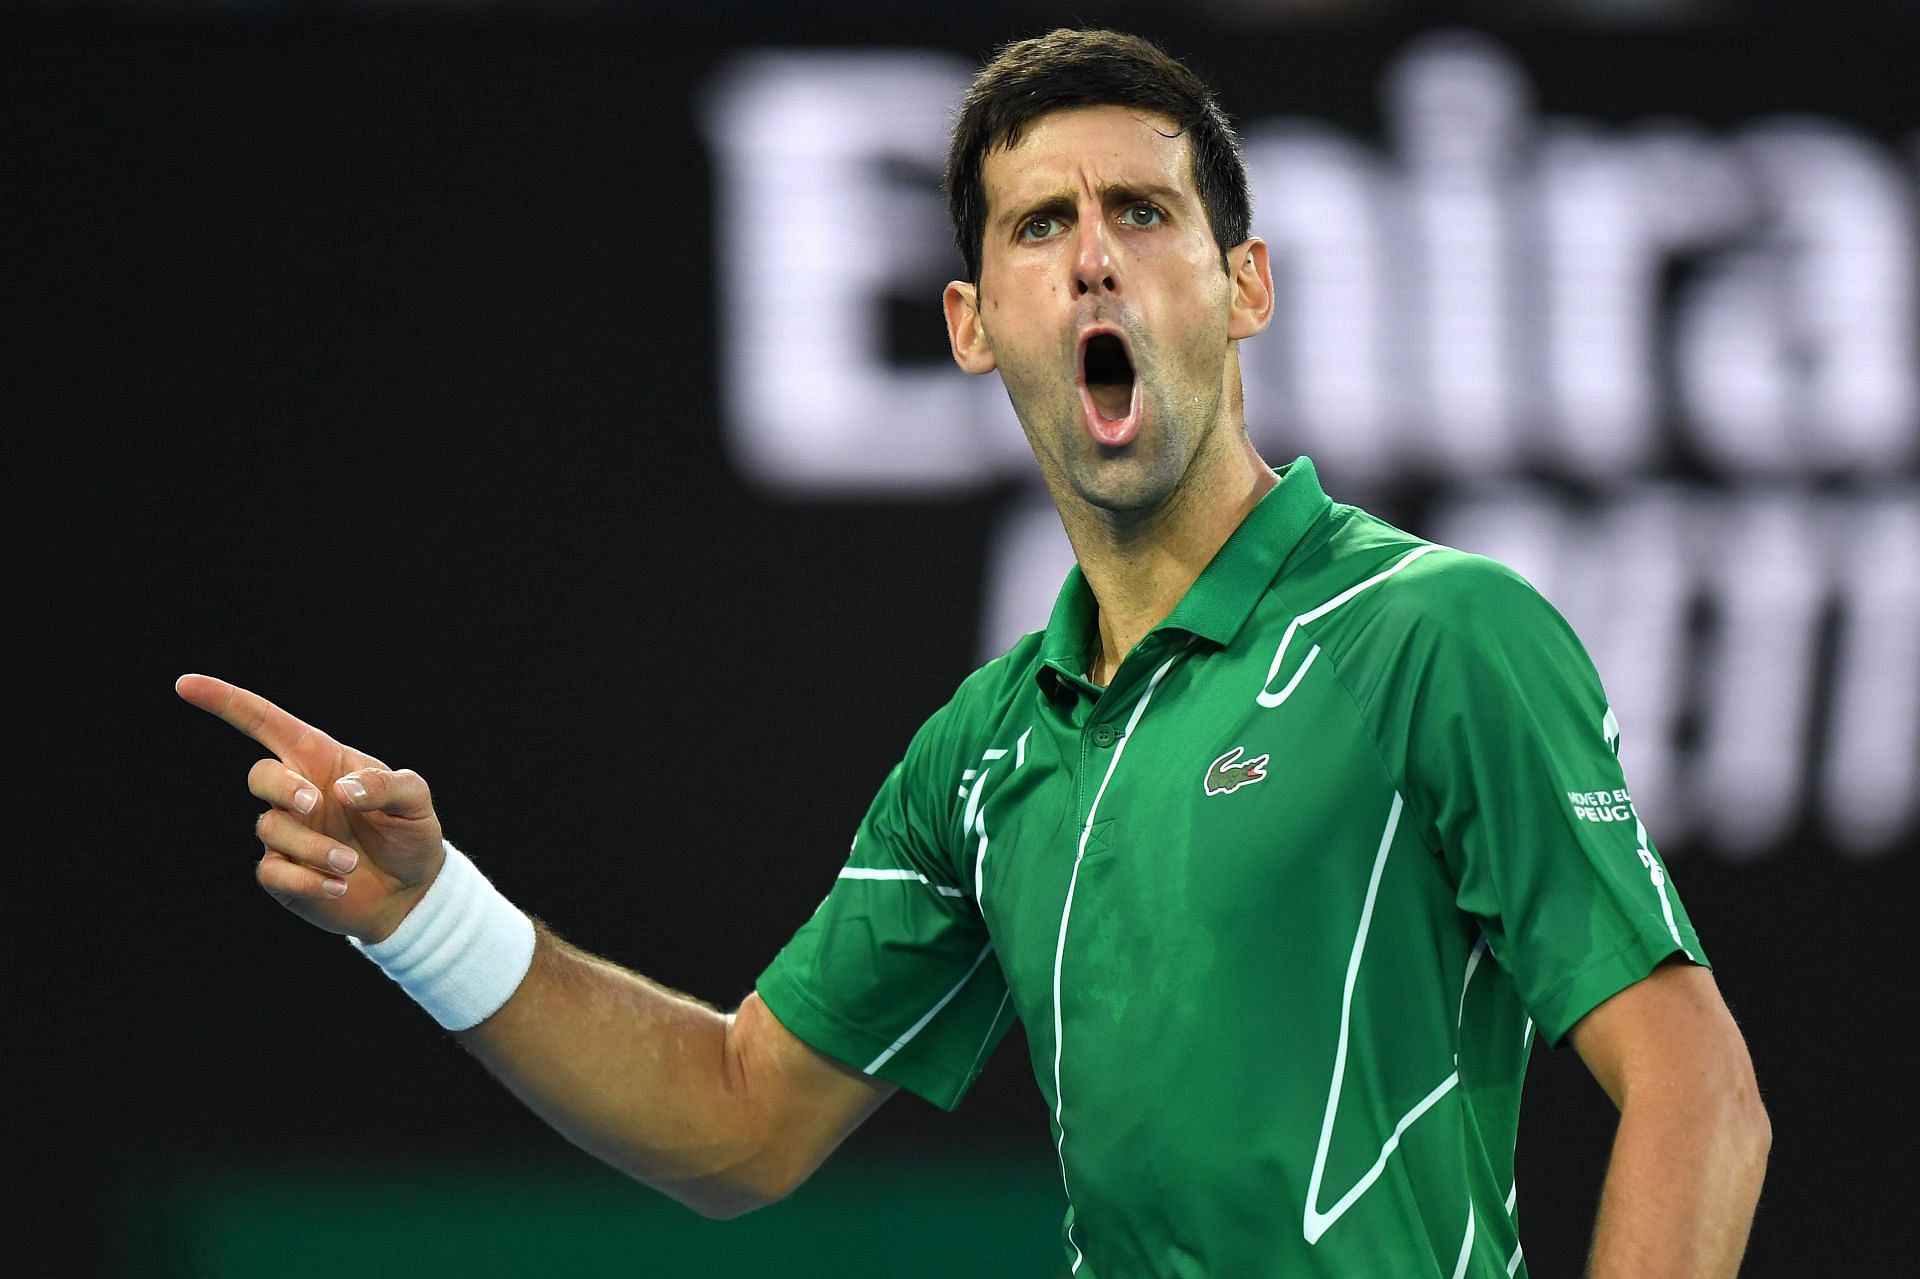 Novak Djokovic finally addressed the public since landing in Australia